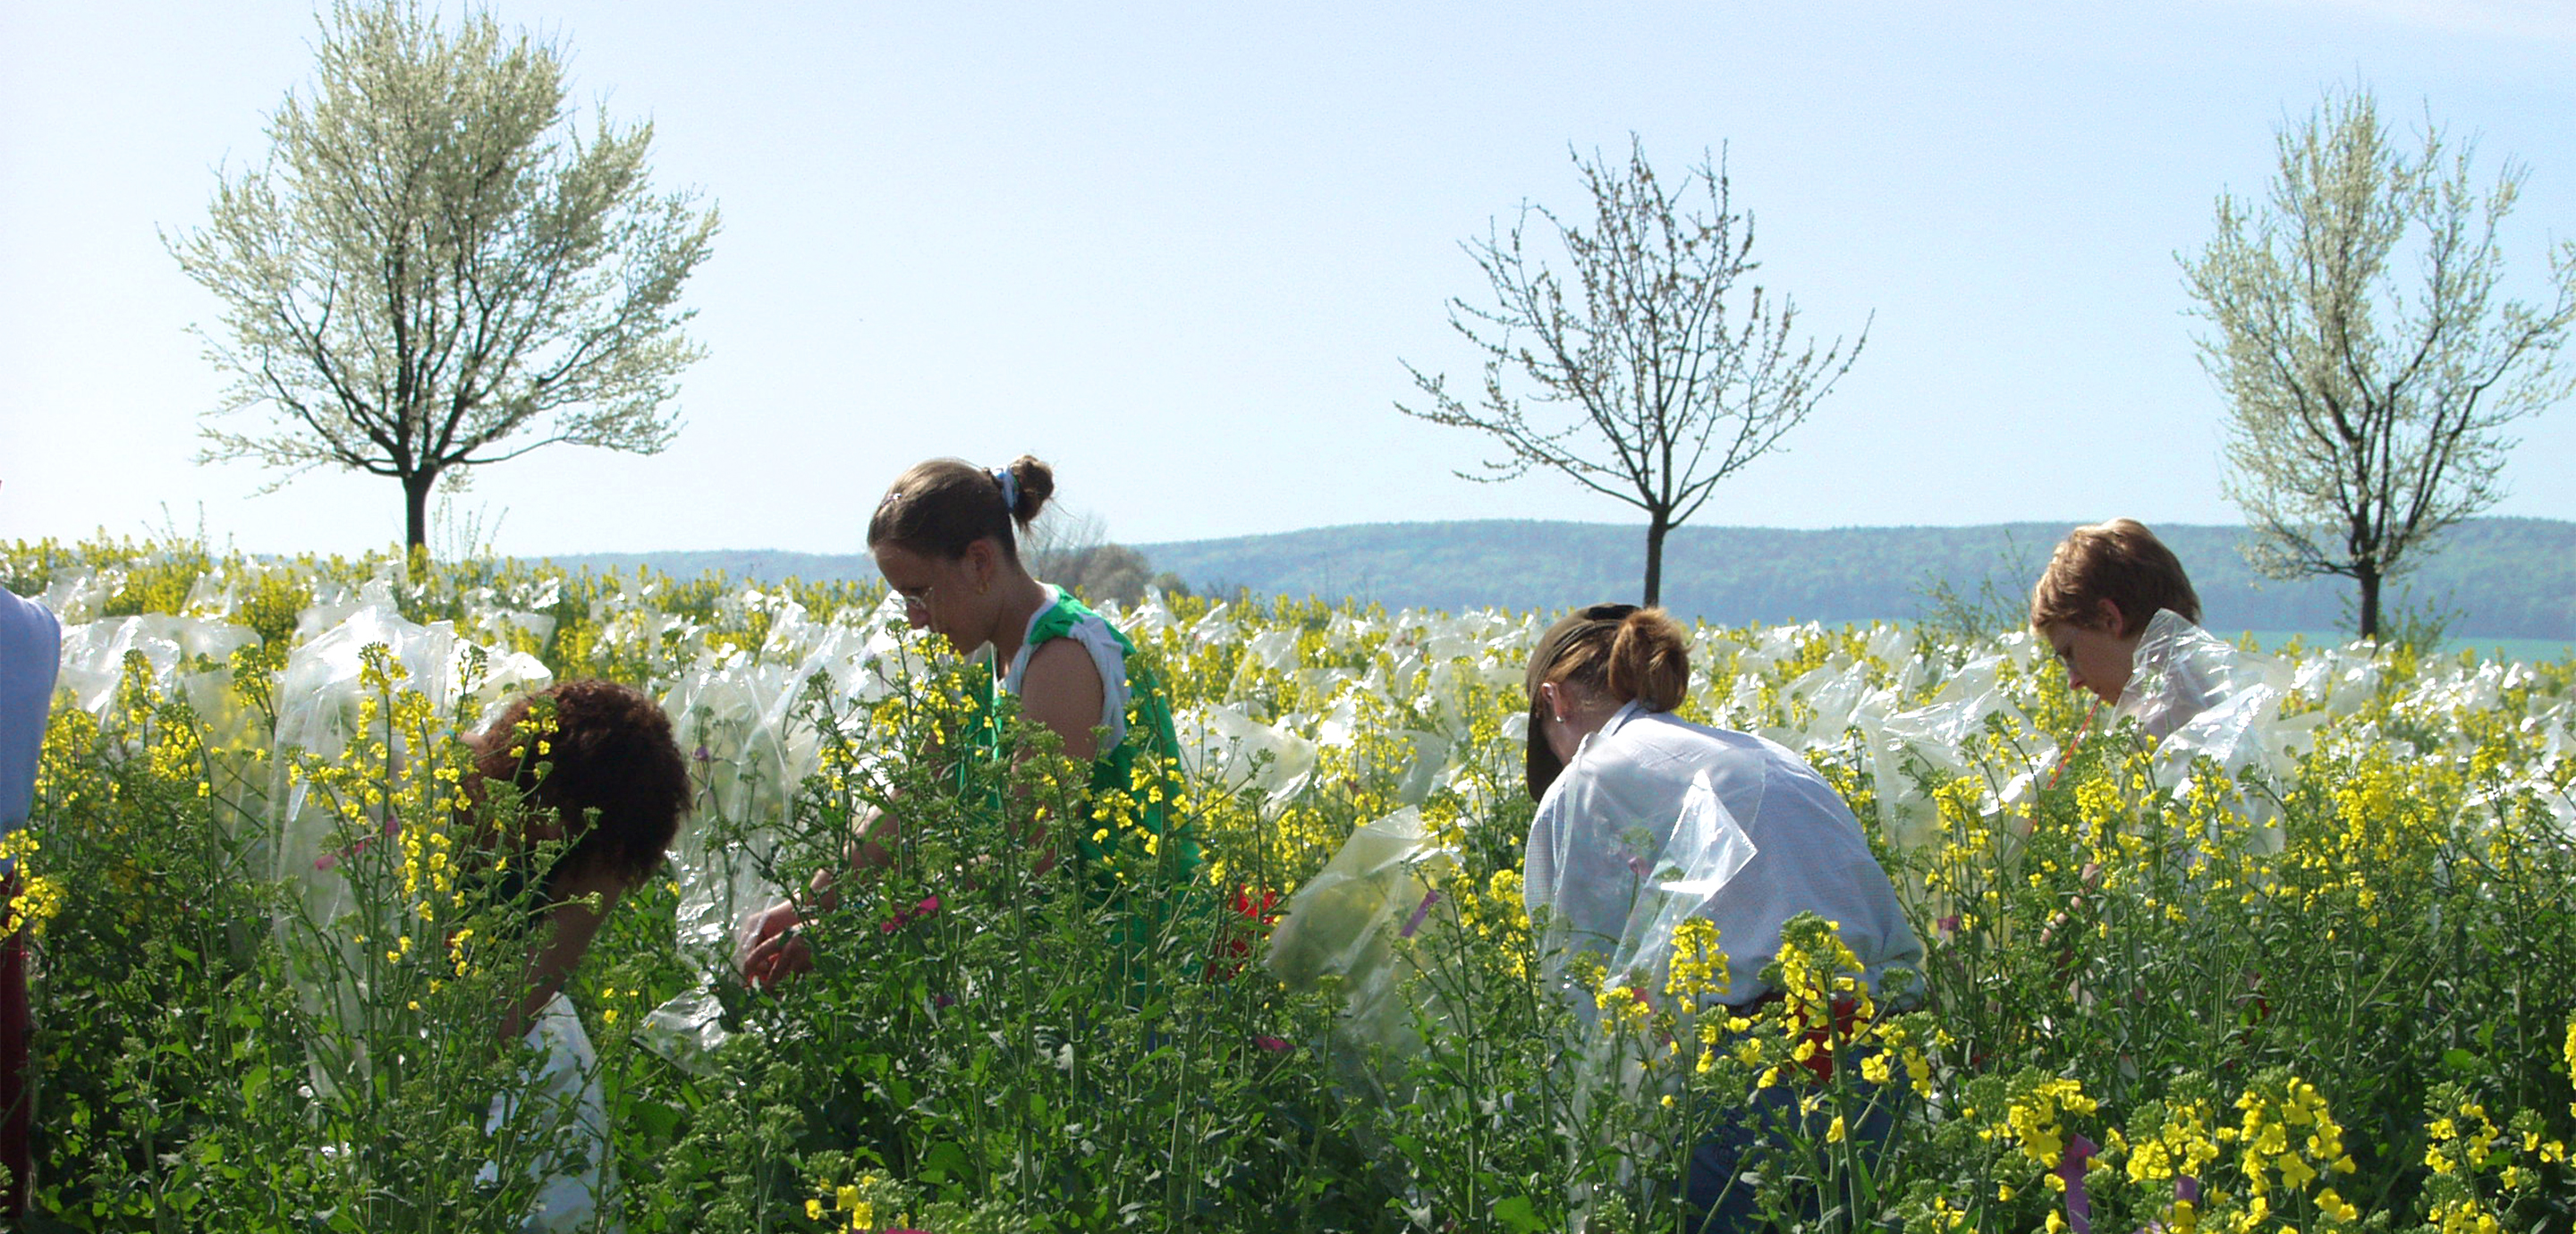 Štyria sezónni asistenti v repkovom poli medzi kvitnúcimi repkovými rastlinami